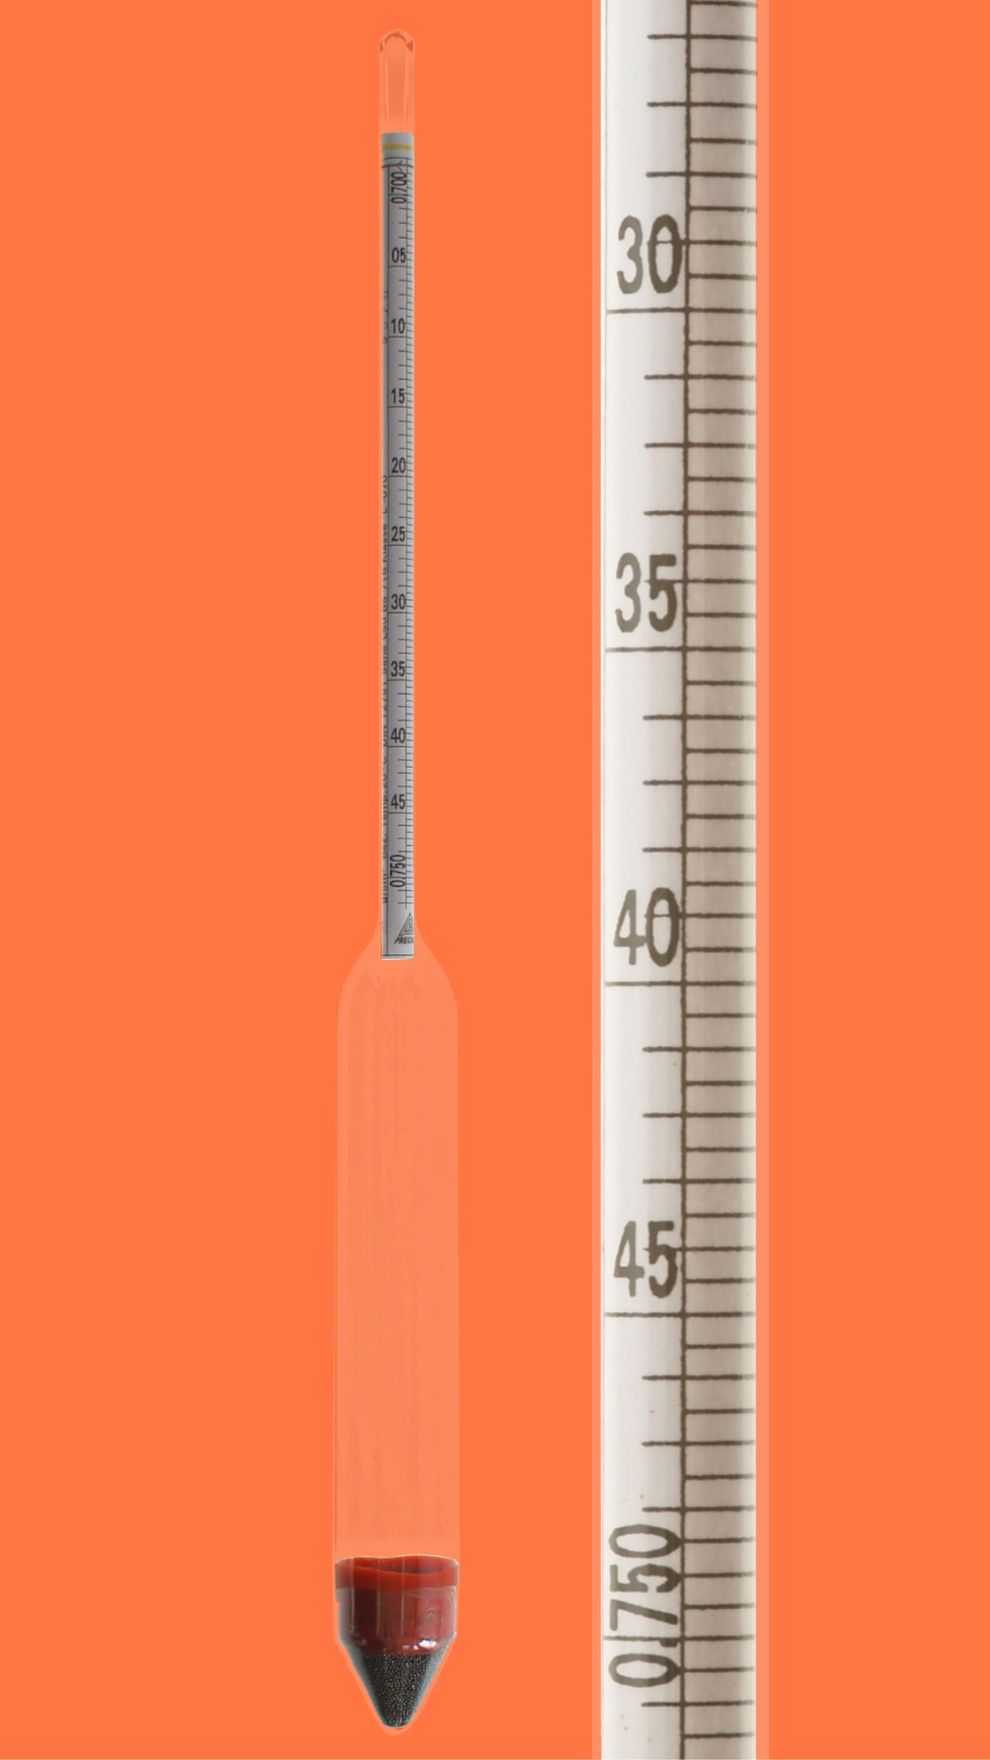 Aräometer, DIN 12791, L50, 1,20-1,25:0,0005g/cm³, Bezugstemp. 20°C, ohne Thermometer